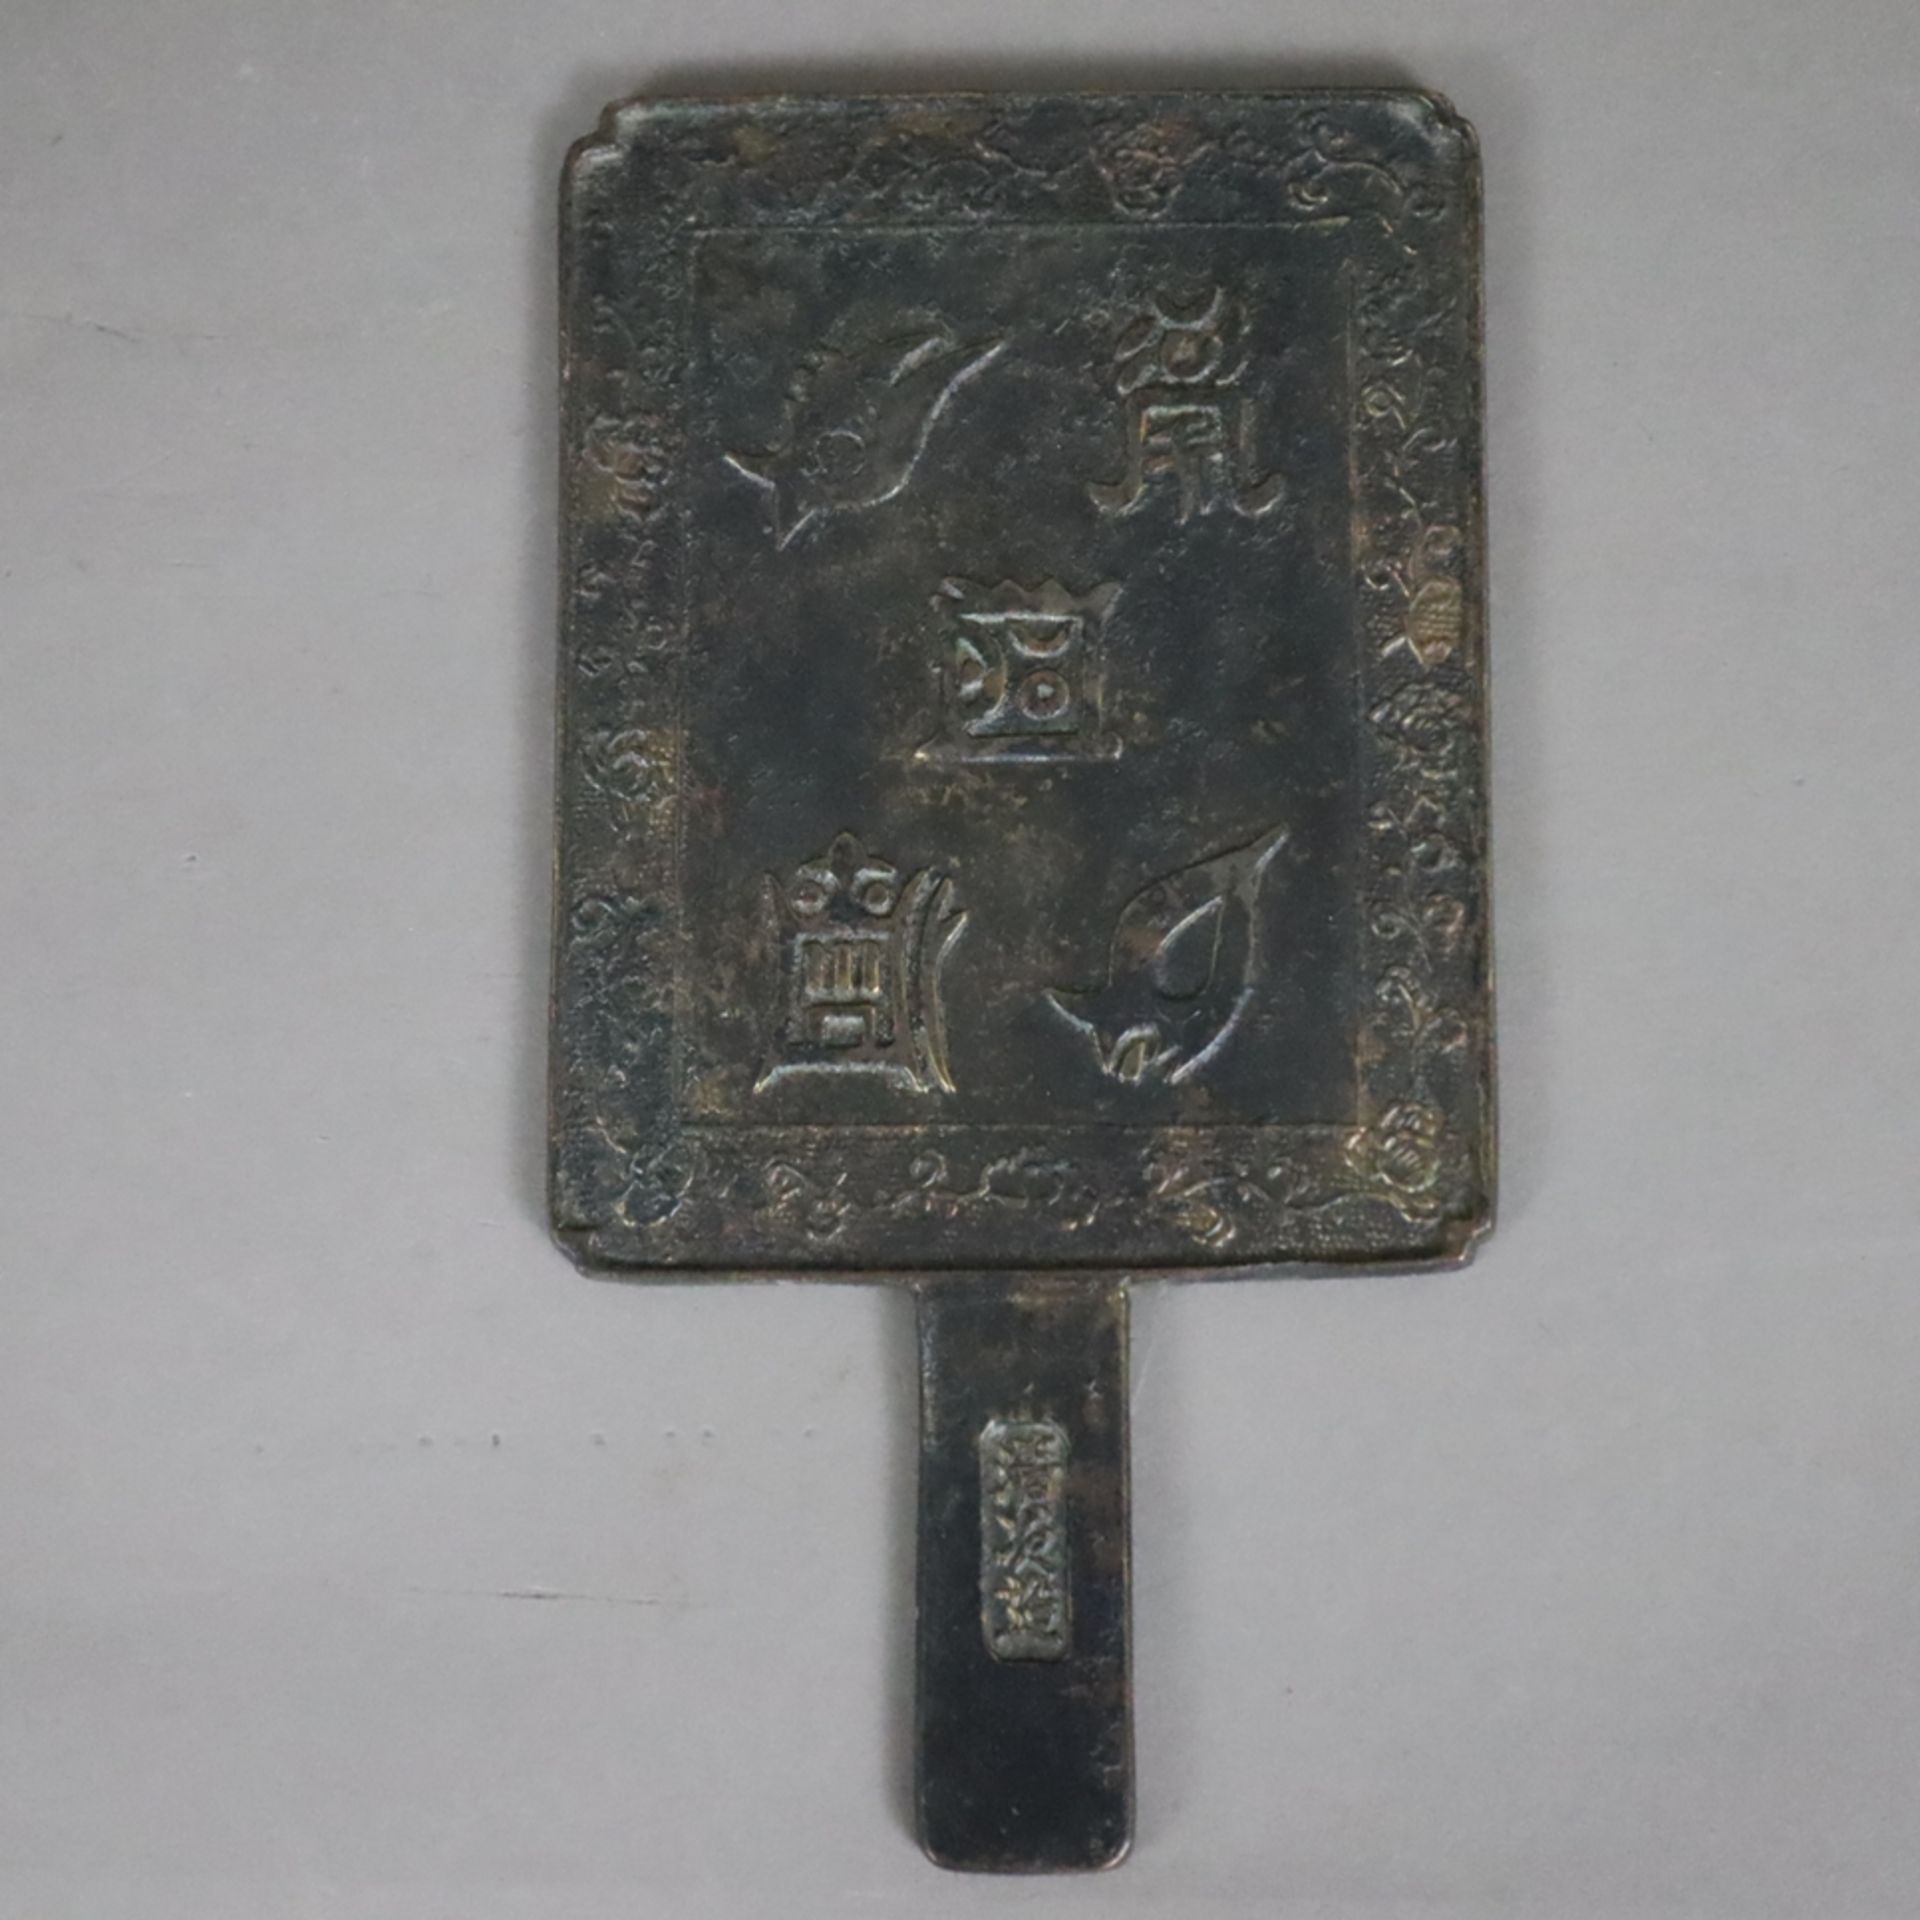 Handspiegel aus Bronze - Japan, Bronze mit dunkler Patina, zierreliefiert, gegossene Signaturkartus